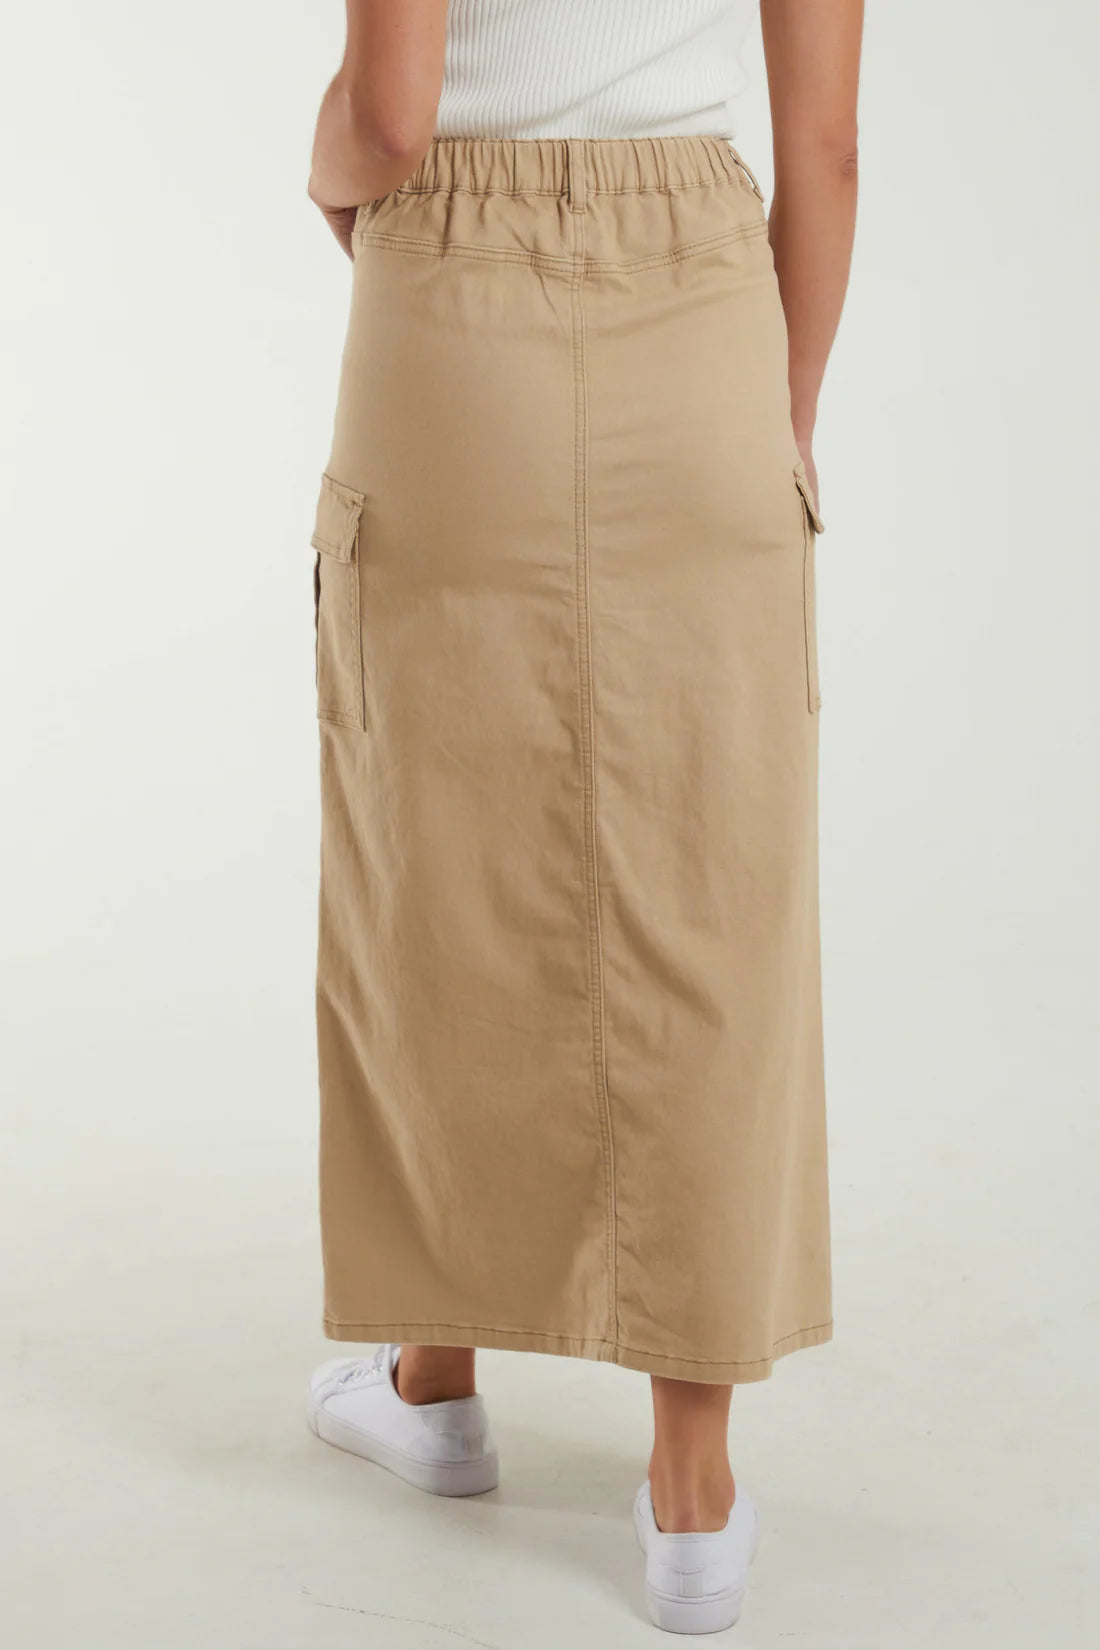 Becky Cotton Cargo Skirt - Chino Beige